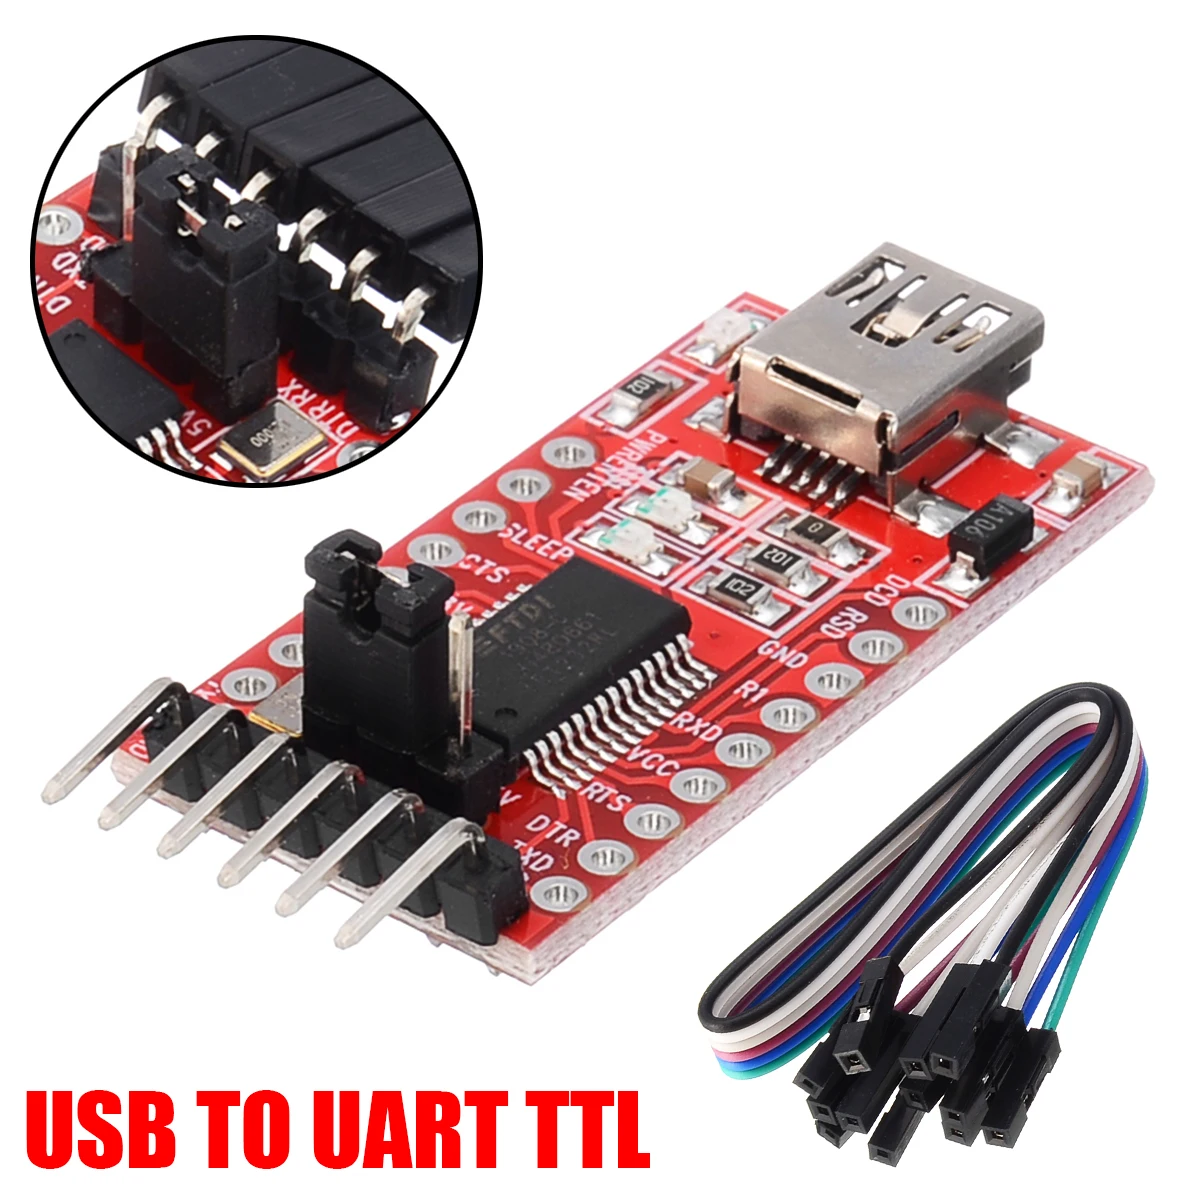 New High Quality USB To TTL Serial Module FTDI FT232RL USB 3.3V 5V To TTL Serial UART interface Converter Adapter Module